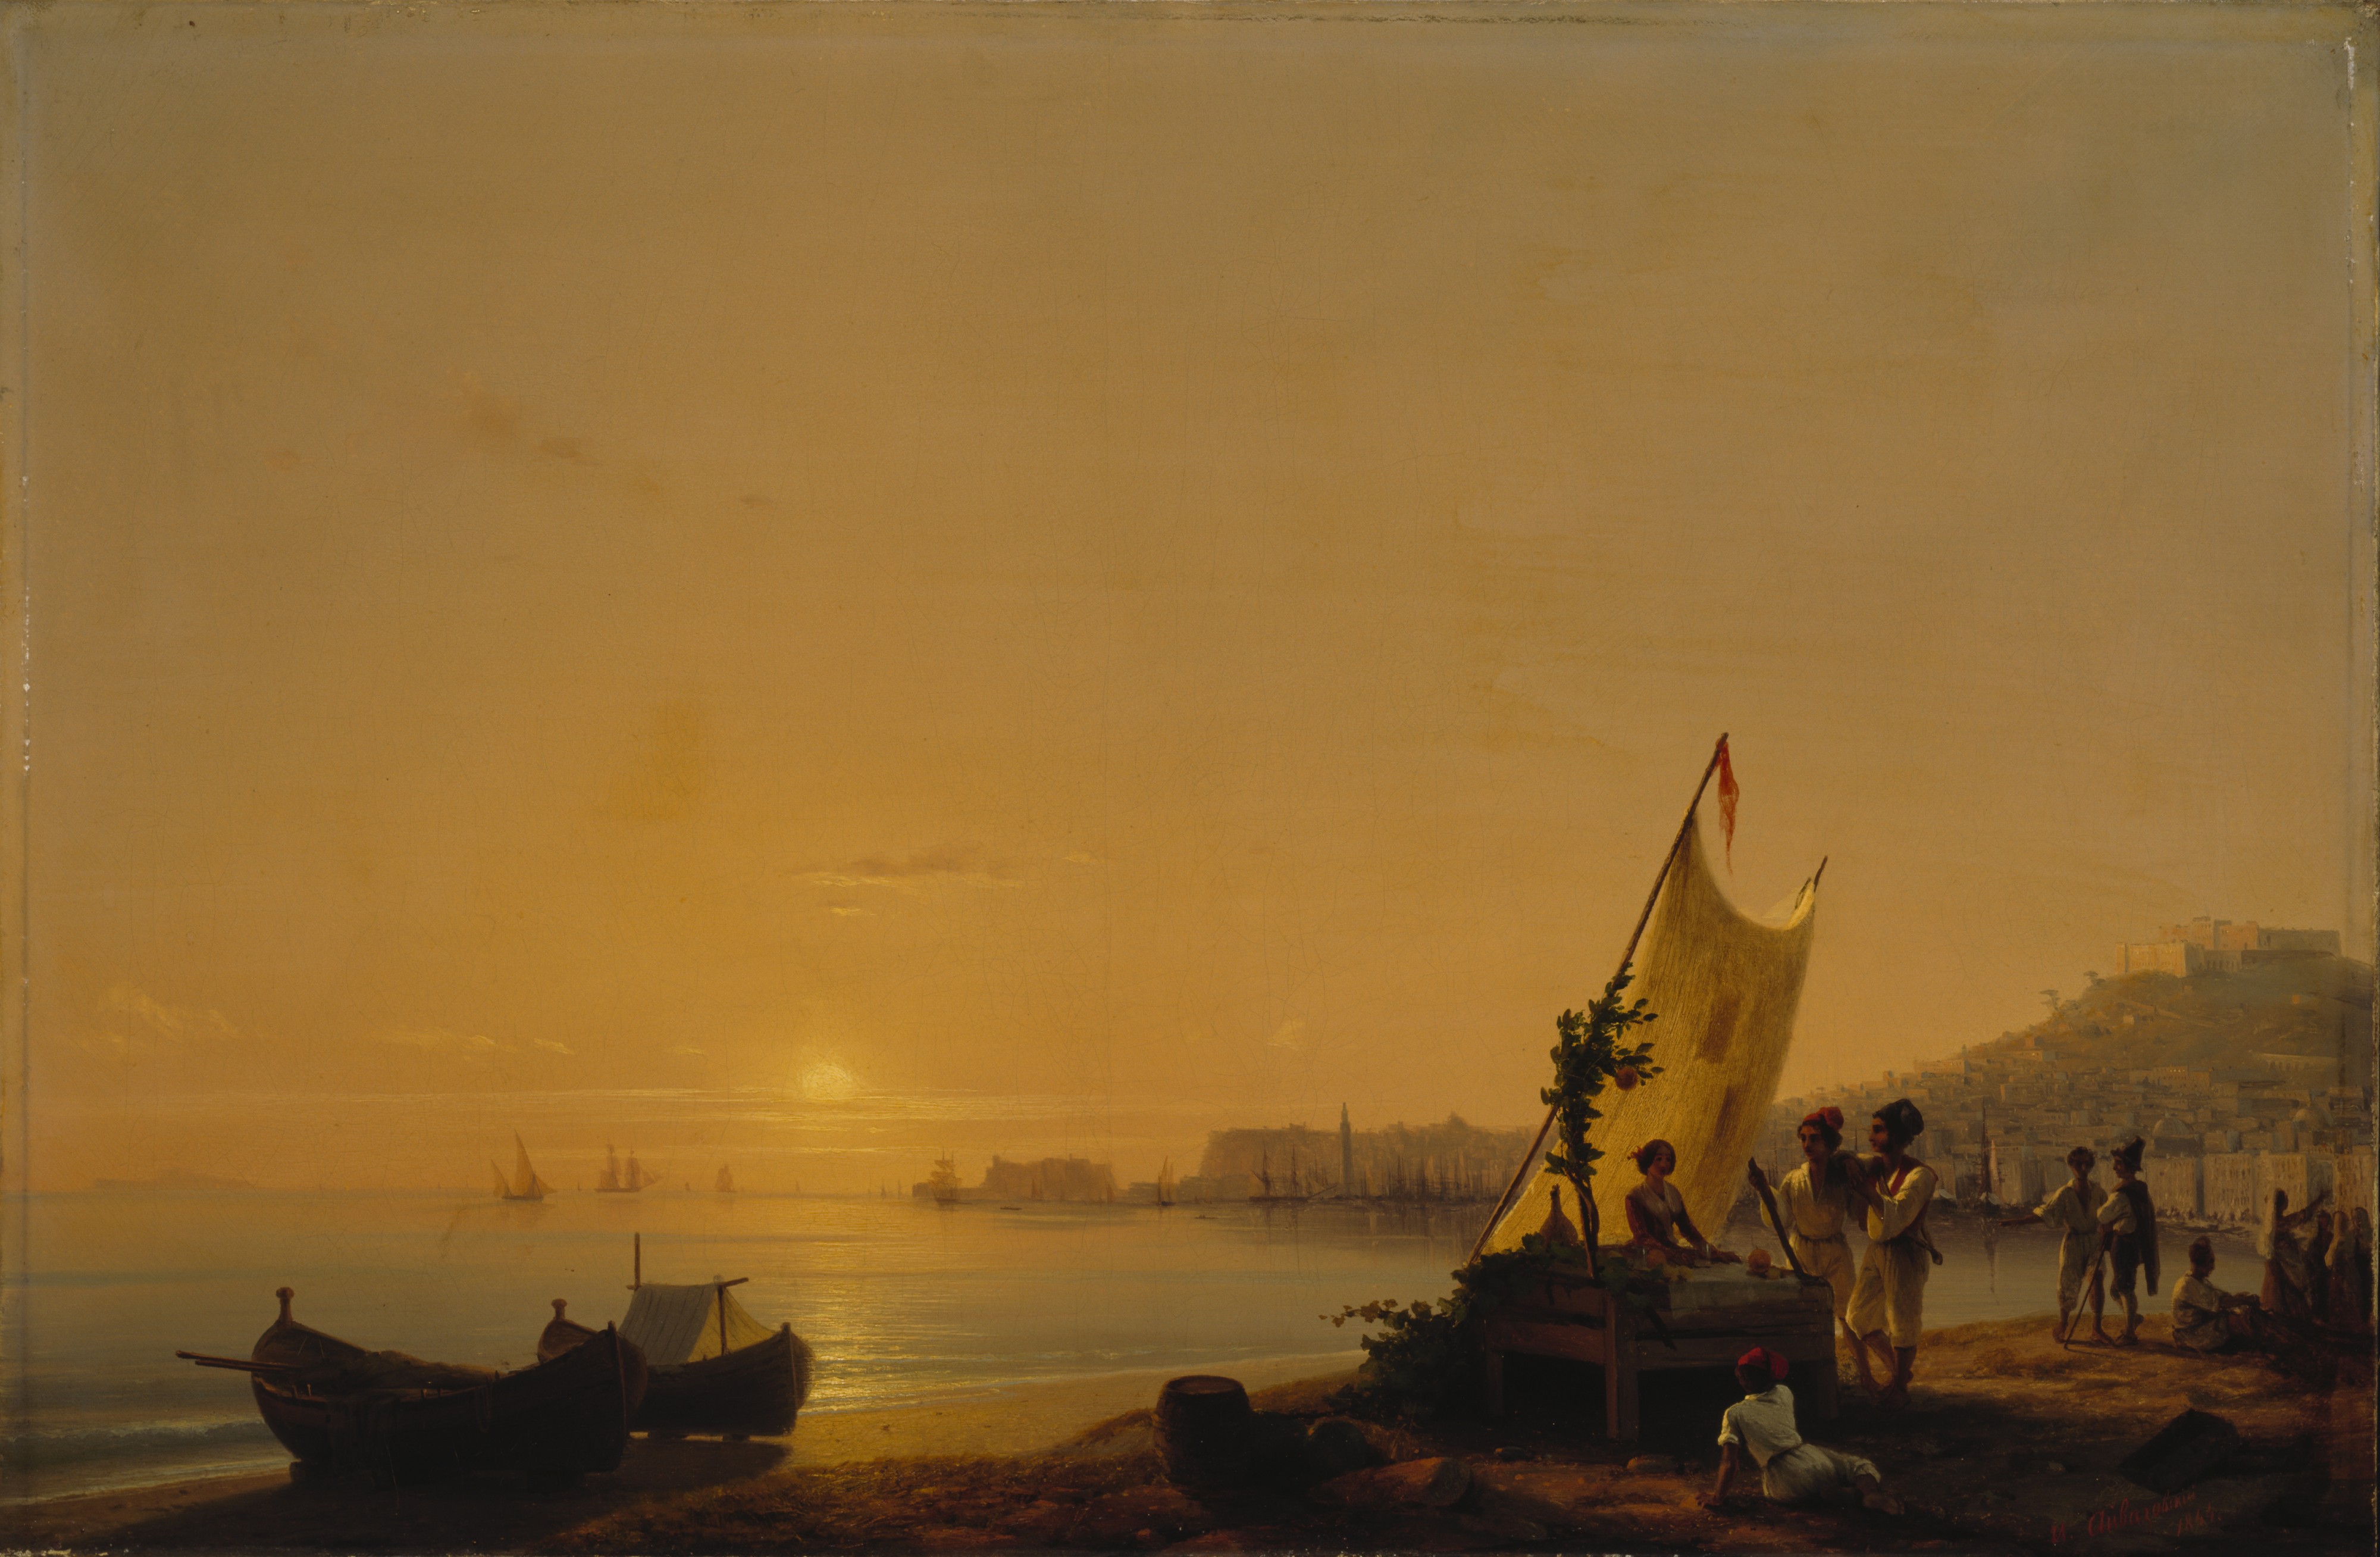 Ivan Aivazovski (1817–1900)- The Bay of Naples - Napolinlahti - Neapelbukten (29467251075)